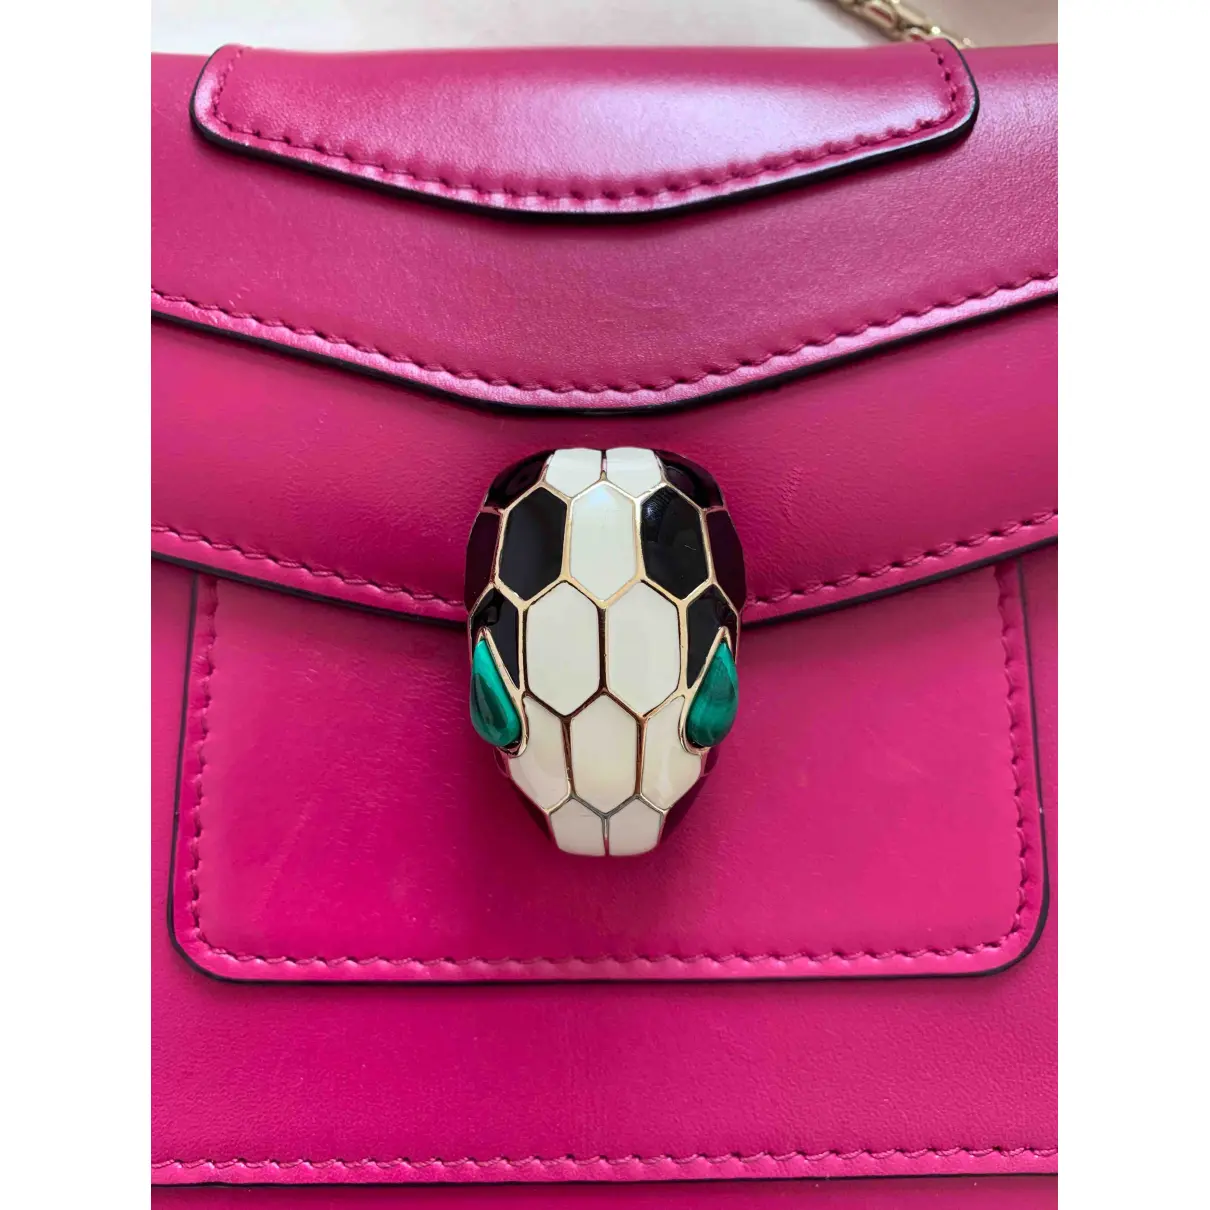 Serpenti leather handbag Bvlgari